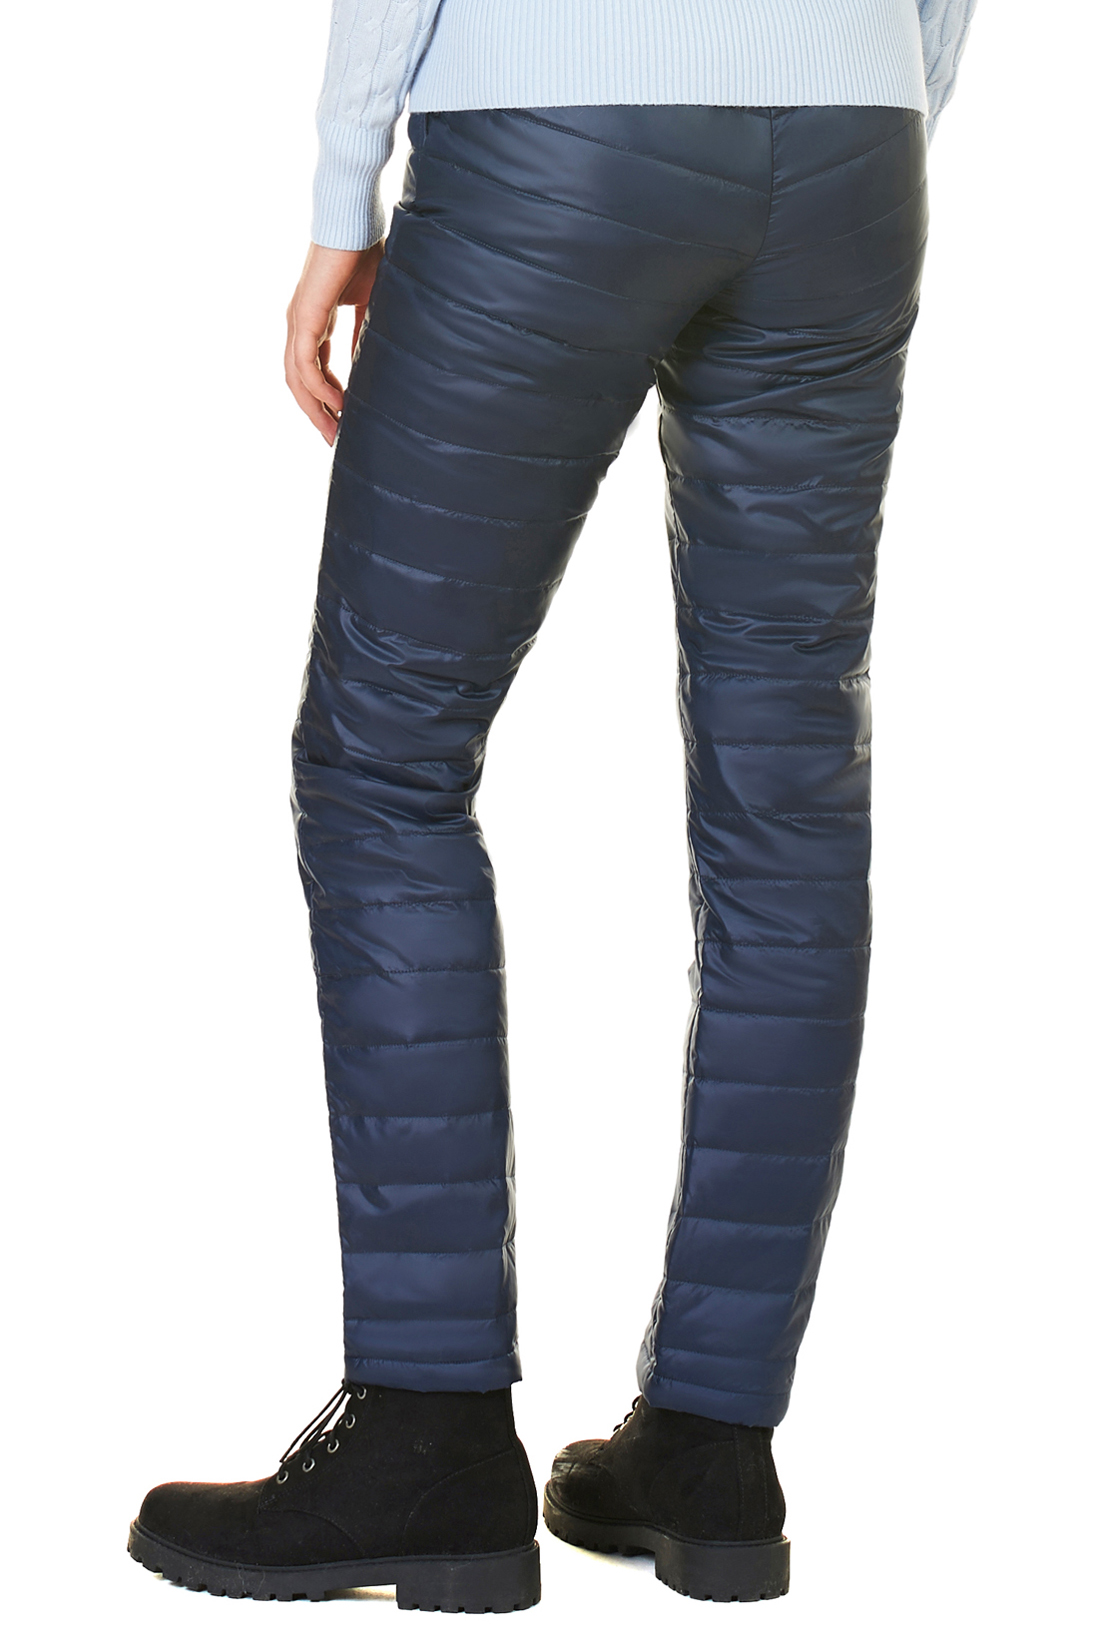 Утеплённые брюки без застёжки (арт. baon B297503), размер XL, цвет синий Утеплённые брюки без застёжки (арт. baon B297503) - фото 2